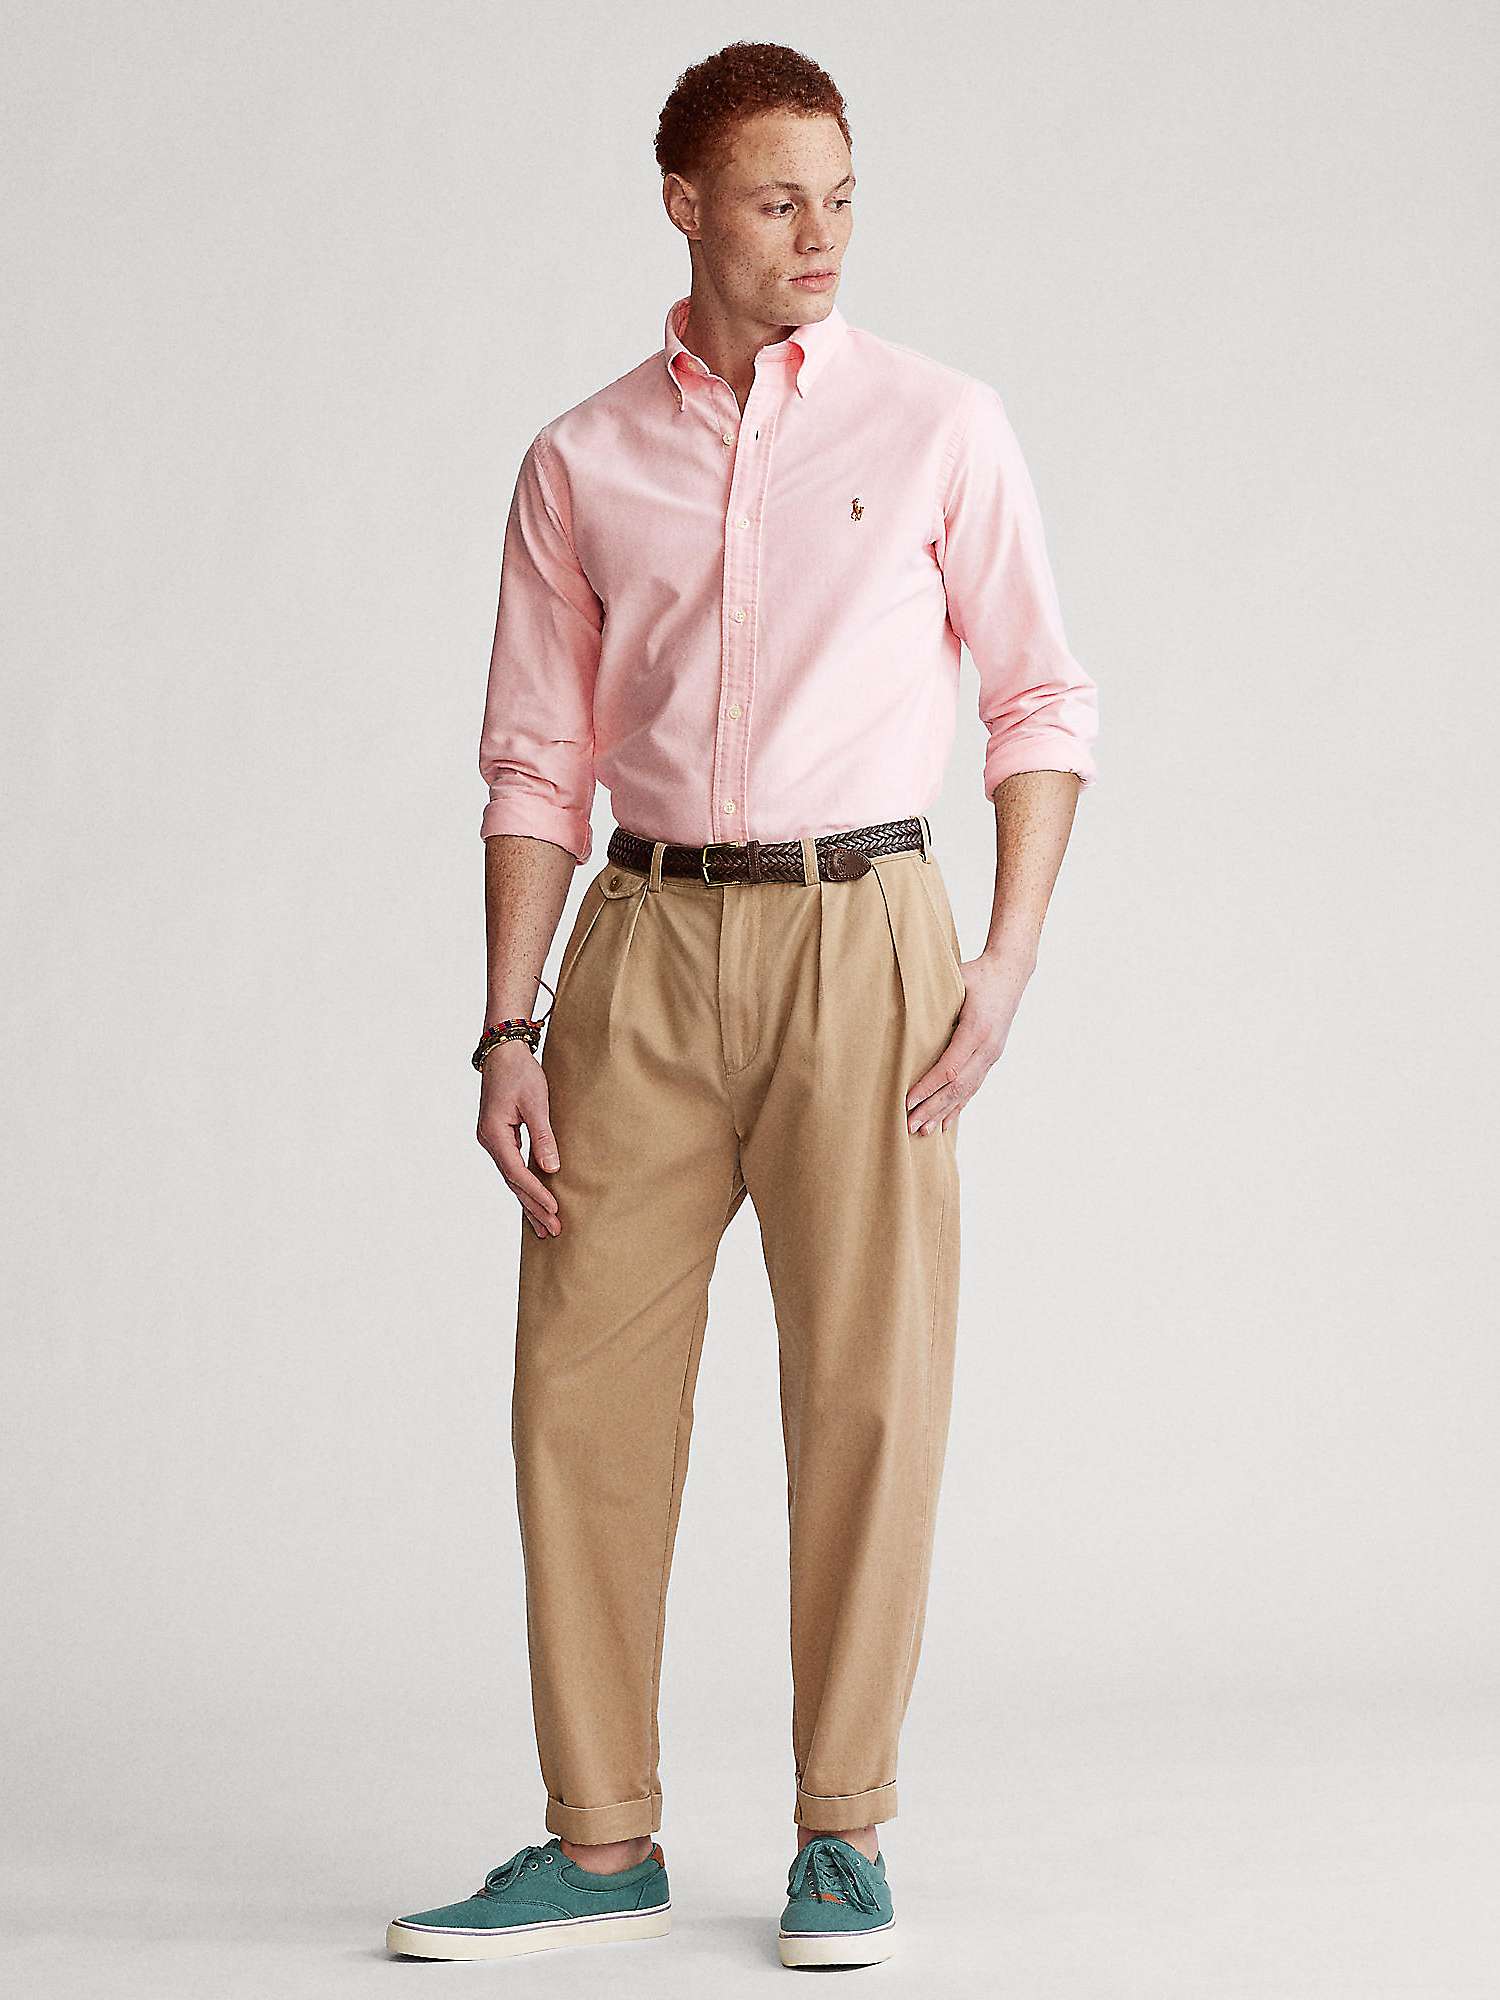 Buy Polo Ralph Lauren Custom Fit Oxford Shirt, Pink Online at johnlewis.com